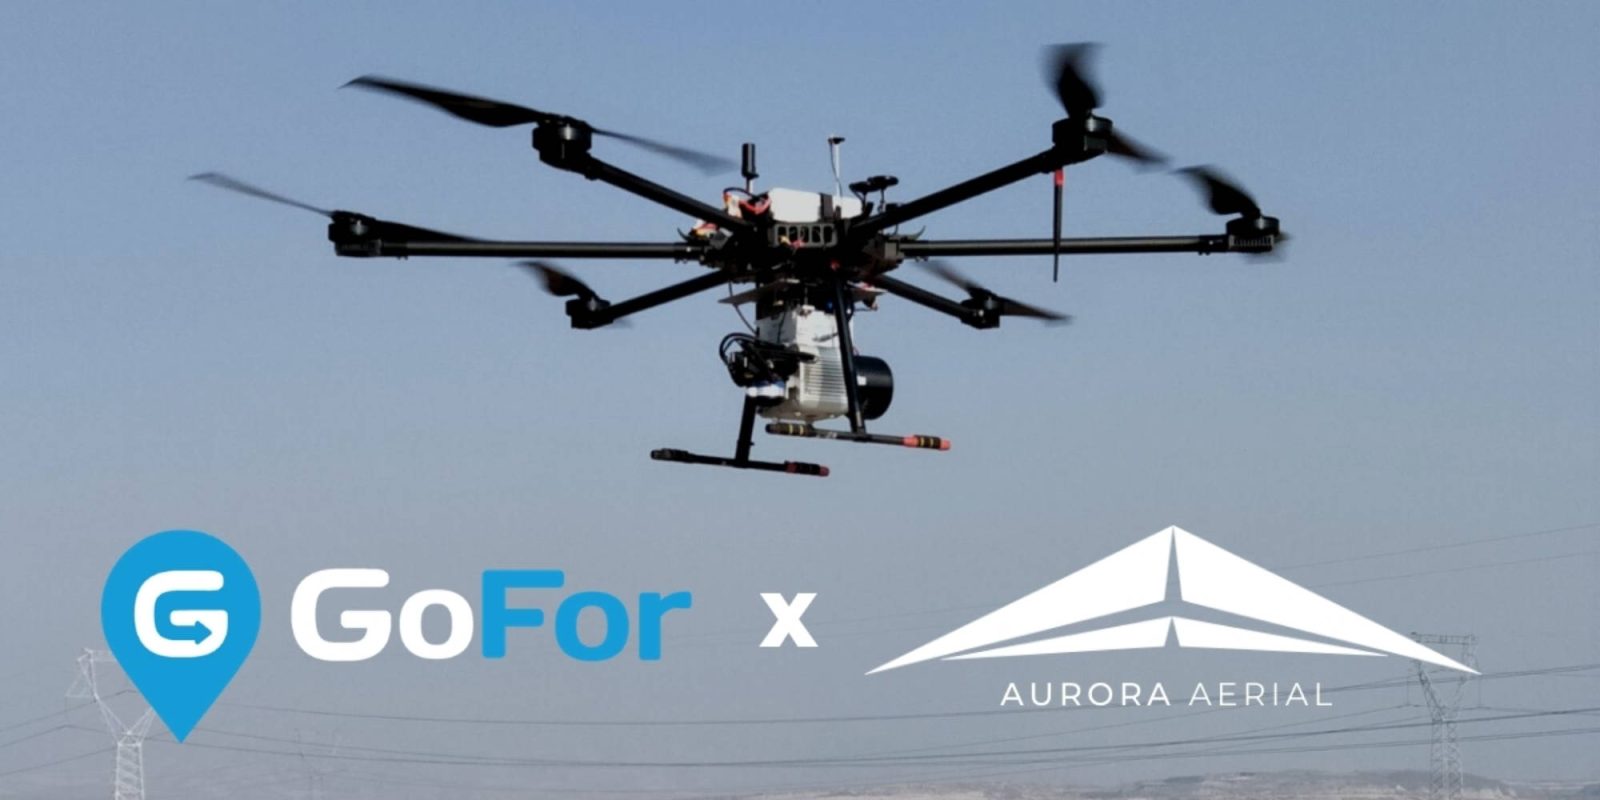 GoFor Aurora Aerial drone